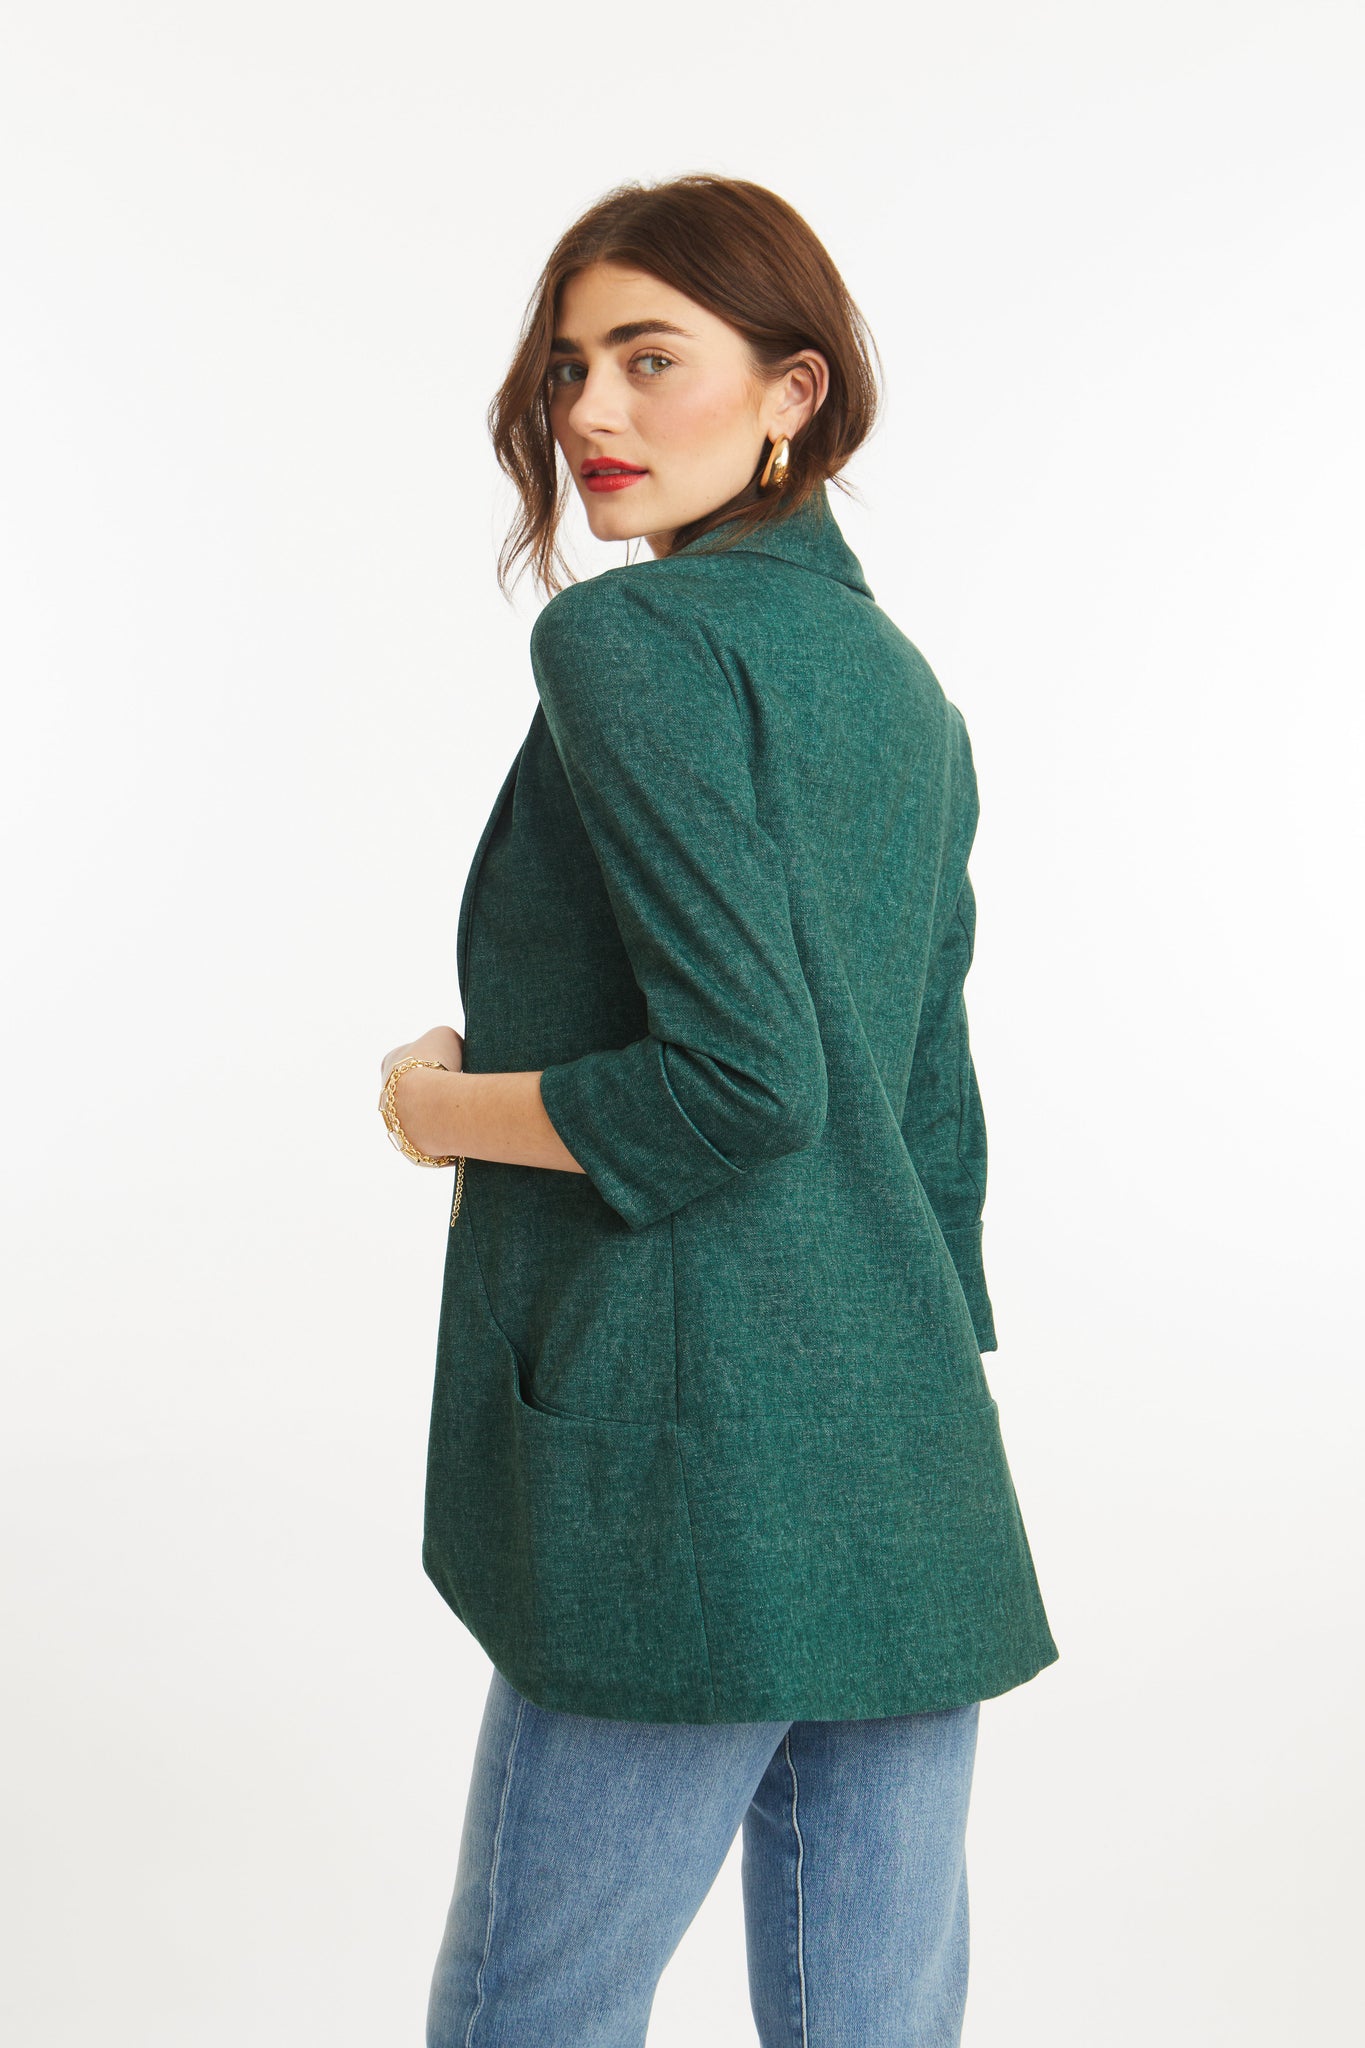 Melanie Knit Jacket in Denim Finish- Deep Green